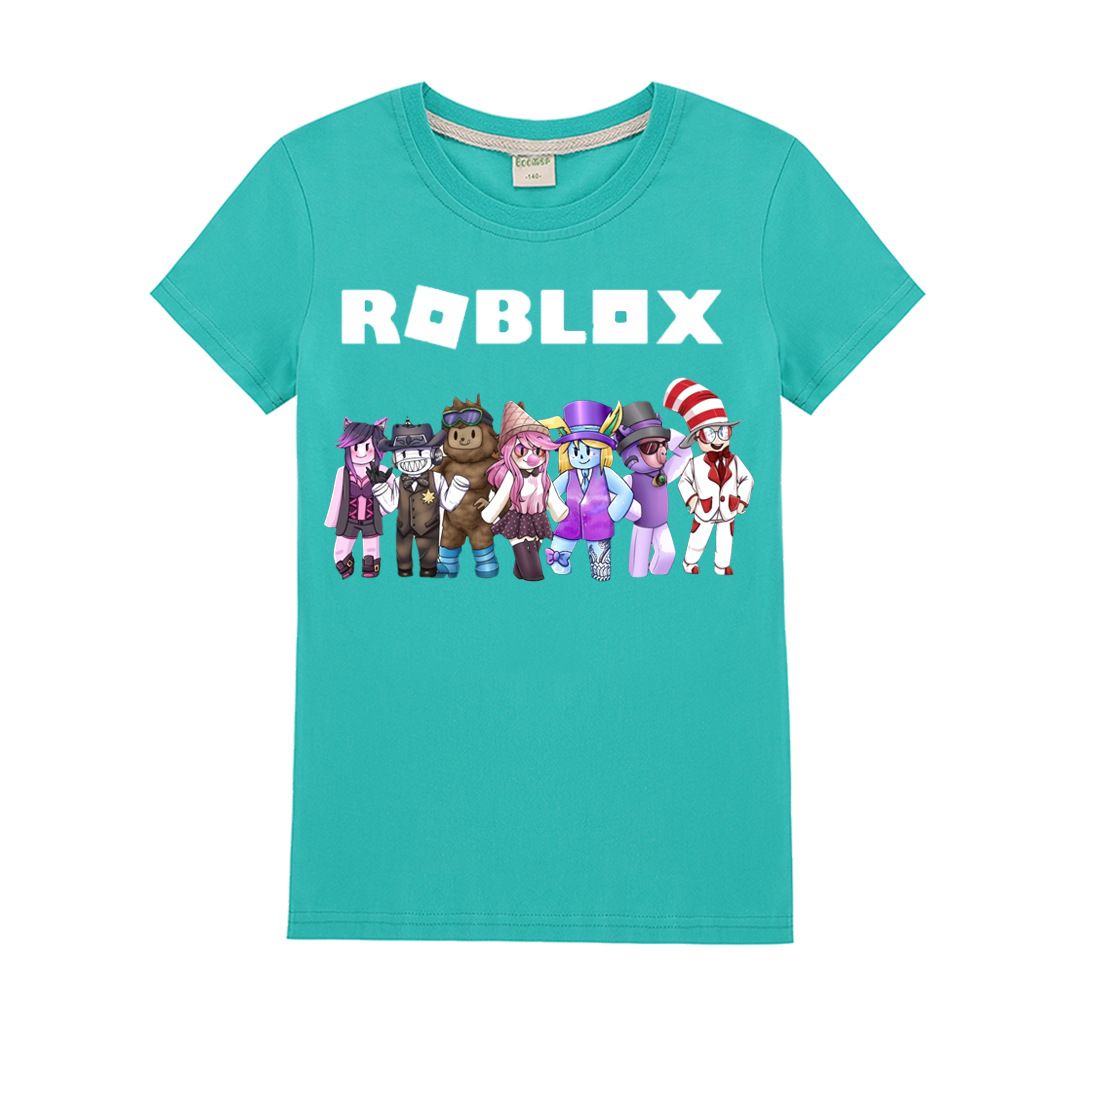 2020 Summer 2020 Roblox Tees Kids Designer Clothes Boys Teenage Girls Clothing Cotton Short Sleeve Girls Shirt T Shirt From Baby0512 13 77 Dhgate Com - cool roblox boy japanese shirts